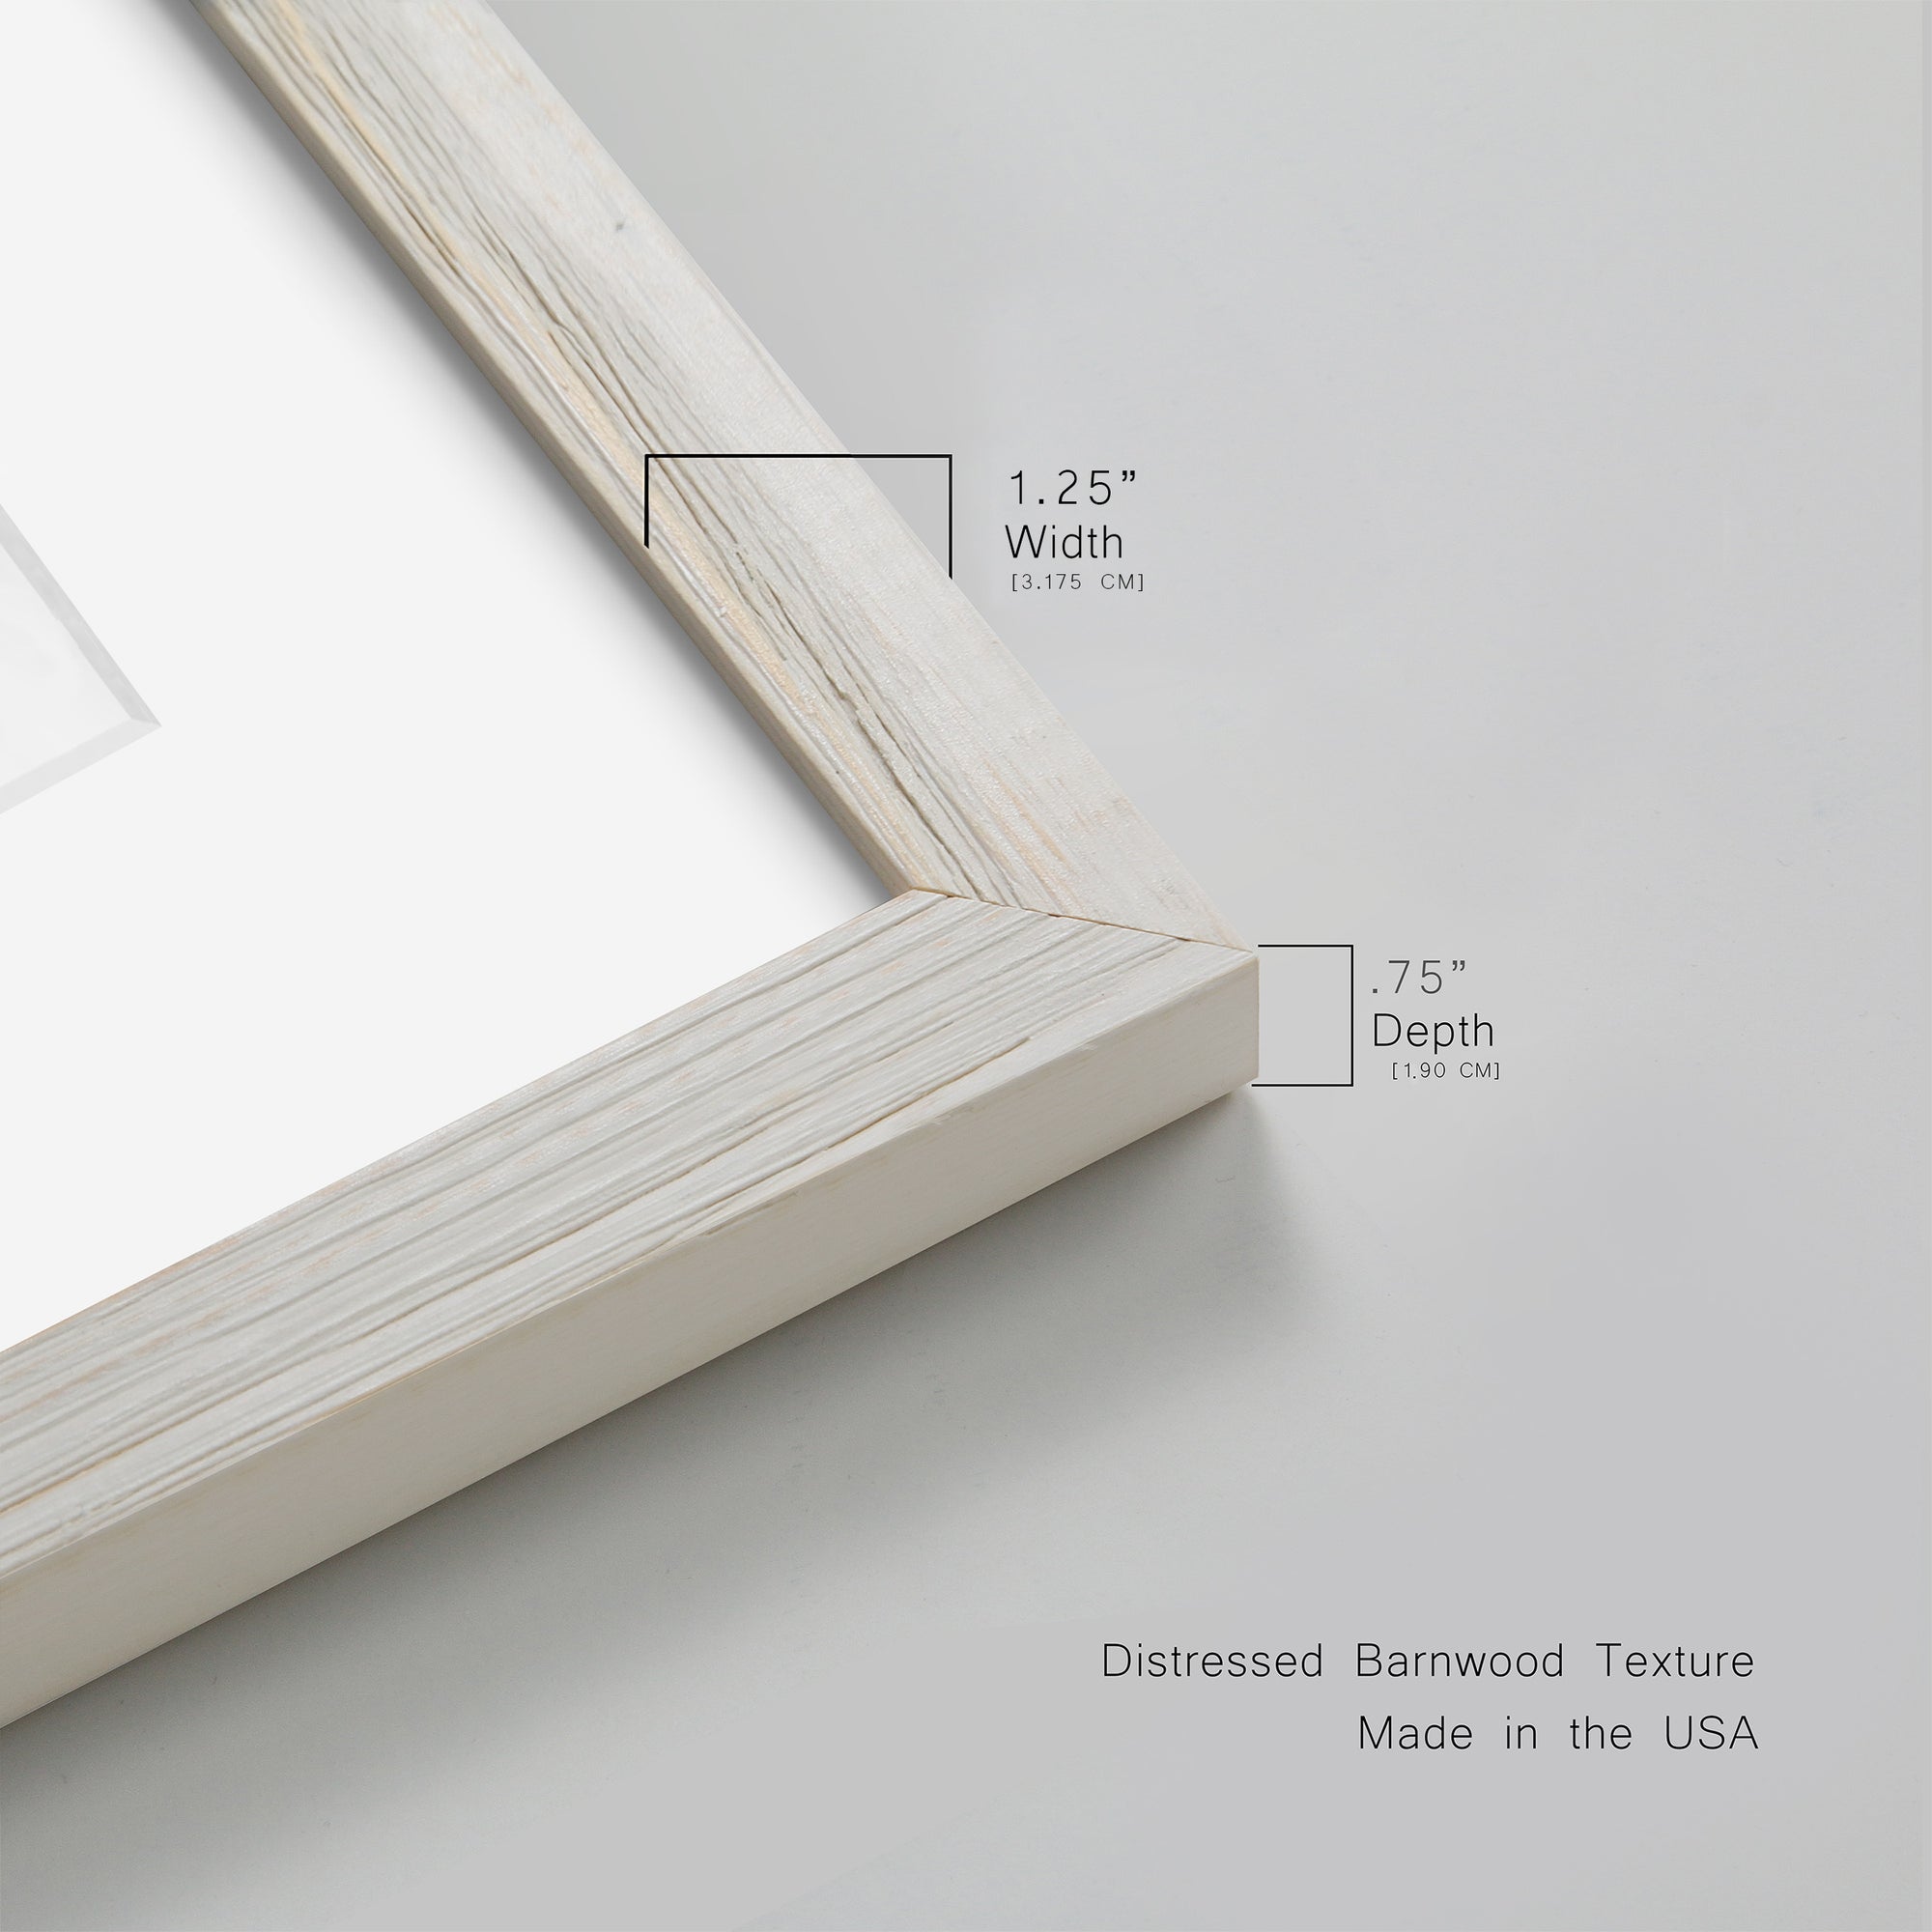 Summer Haze II - Premium Framed Print - Distressed Barnwood Frame - Ready to Hang